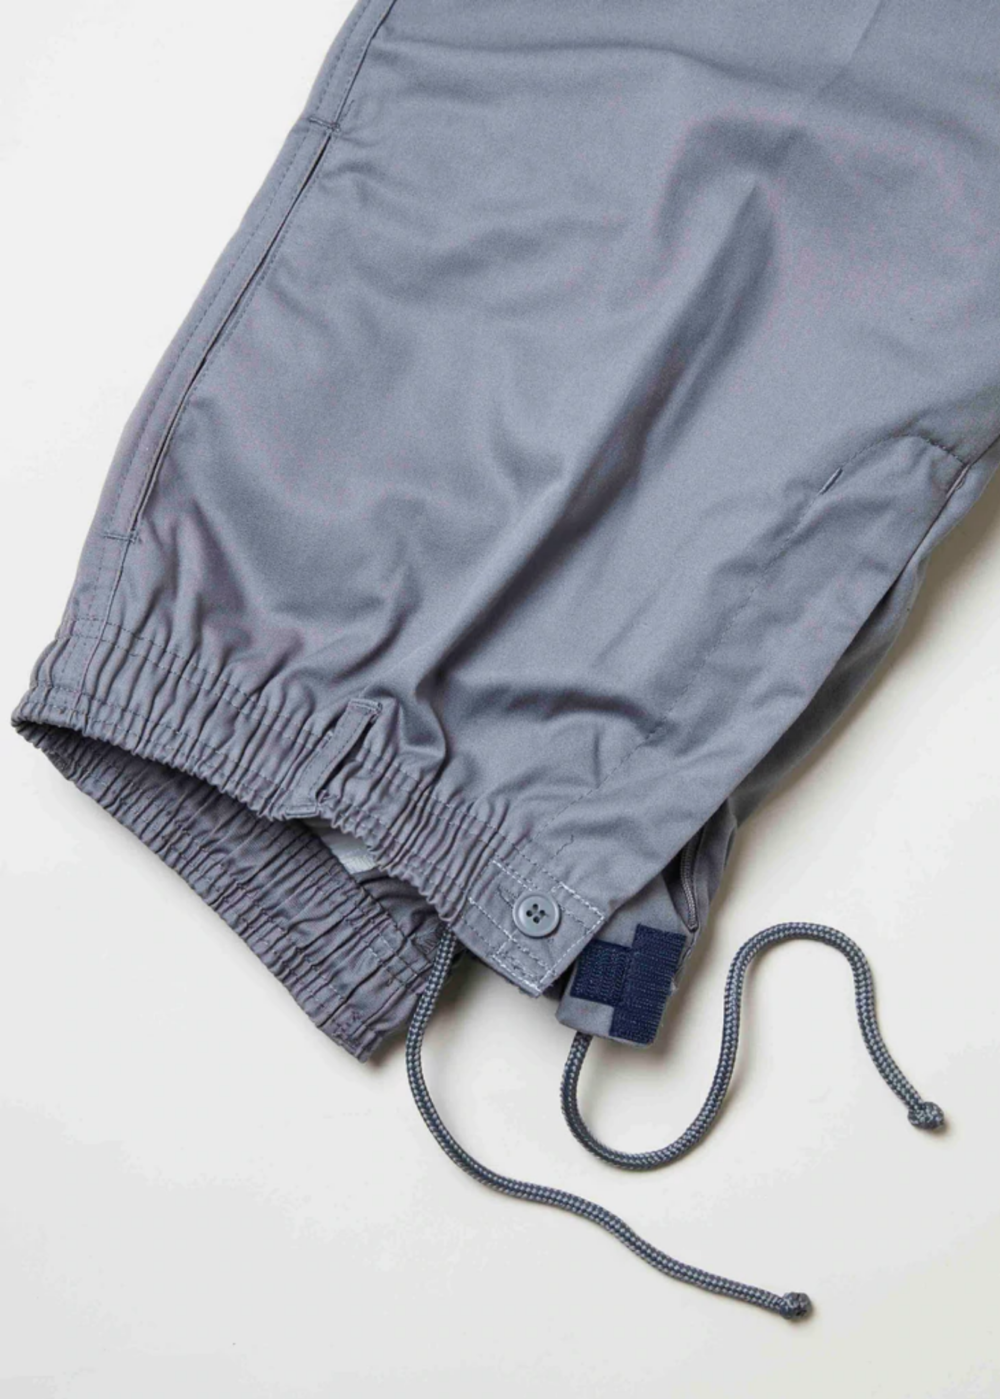 Men's Aubrey straight fit elastic waist adaptive pull-on trousers - Grey (Returns)